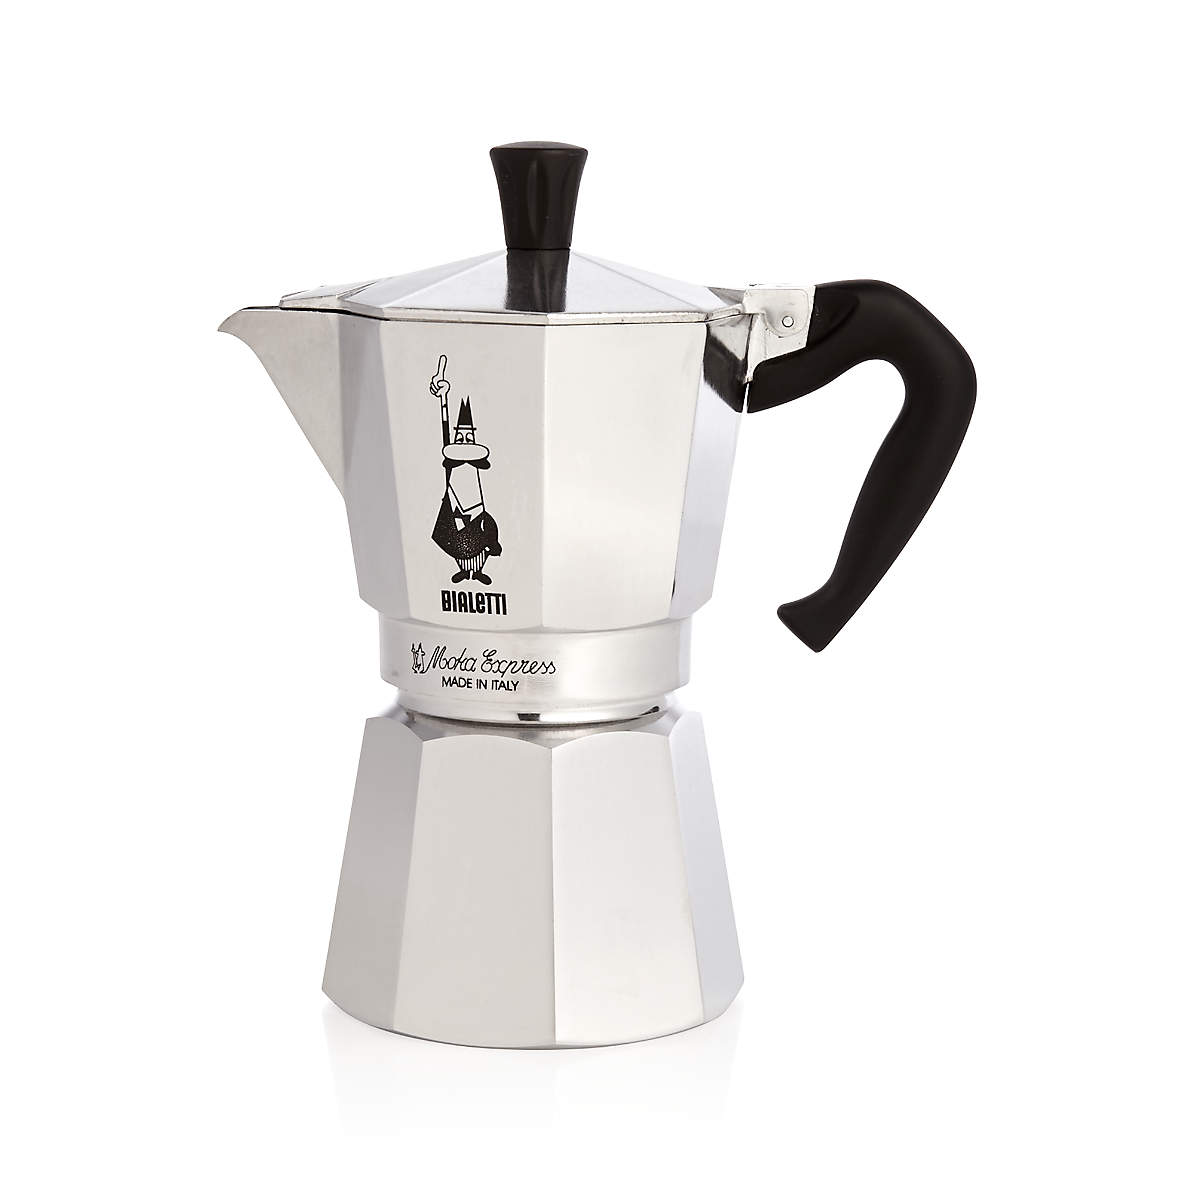 Bialetti Moka Express 6 Cup Espresso Maker/Percolator/Stovetop/Filter  Coffee Maker for an Italian Mocha: Italian Made